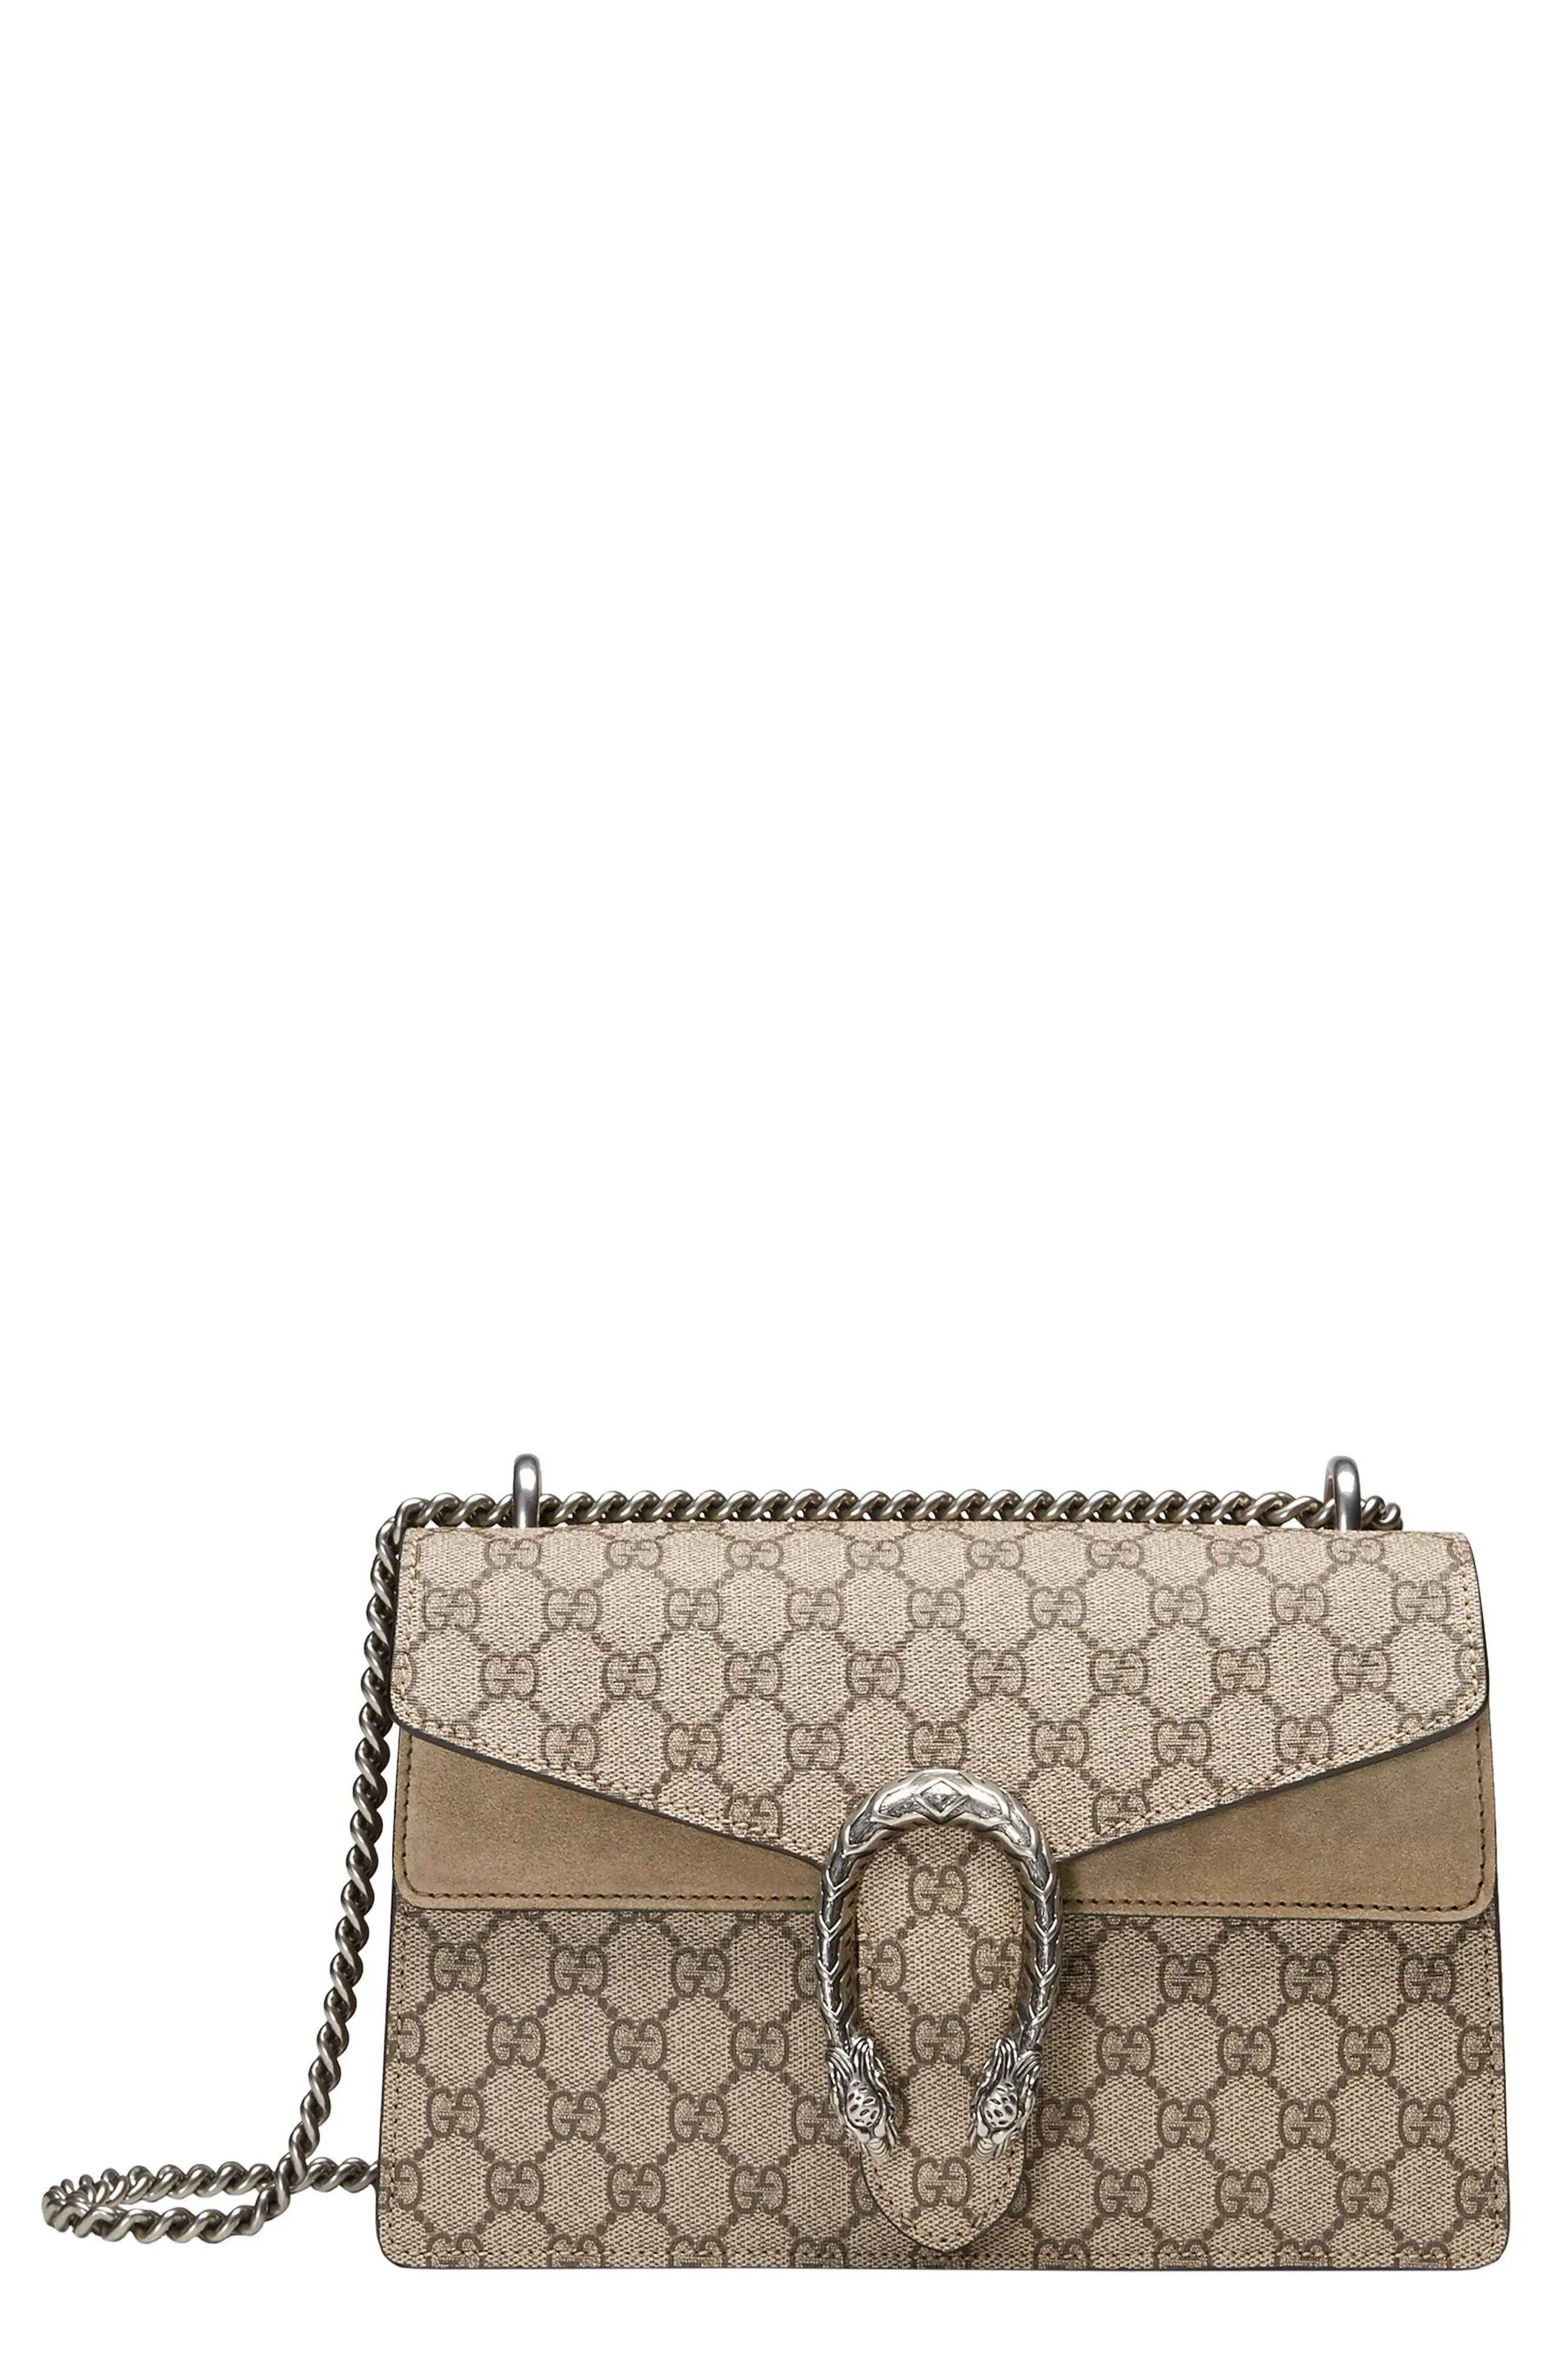 Gucci Small Dionysus GG Supreme Canvas & Suede Shoulder Bag | Nordstrom